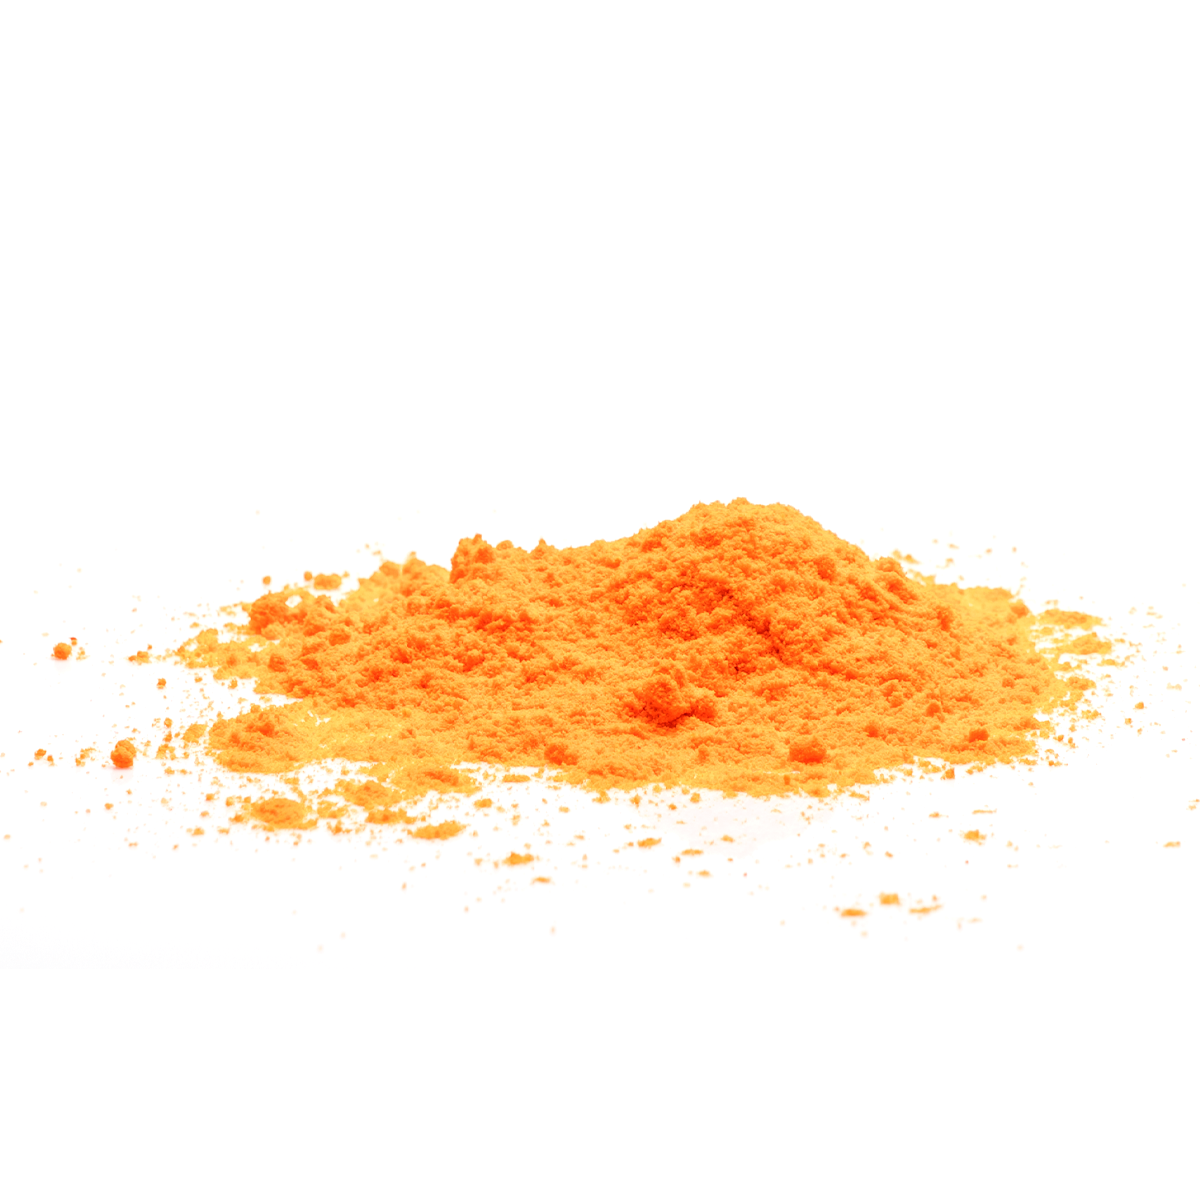 Fluoro Orange Pop Up Mix Zoomed